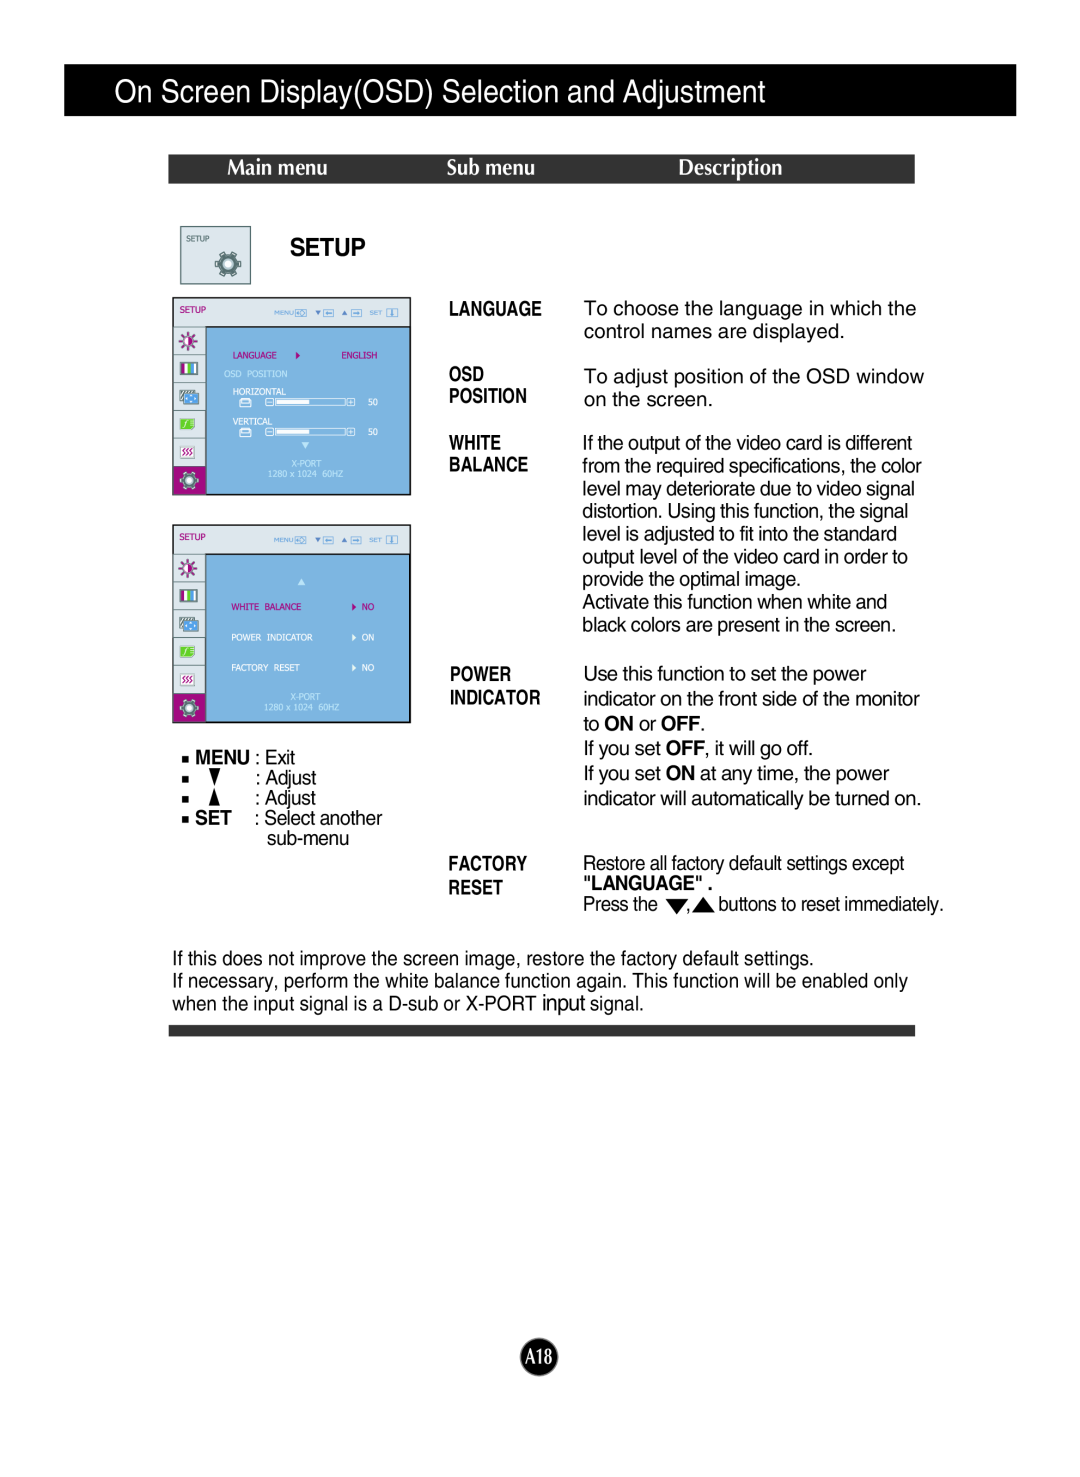 LG Electronics N1942L Setup, On Screen DisplayOSD Selection and Adjustment, Main menu, Sub menu, Description, Language 